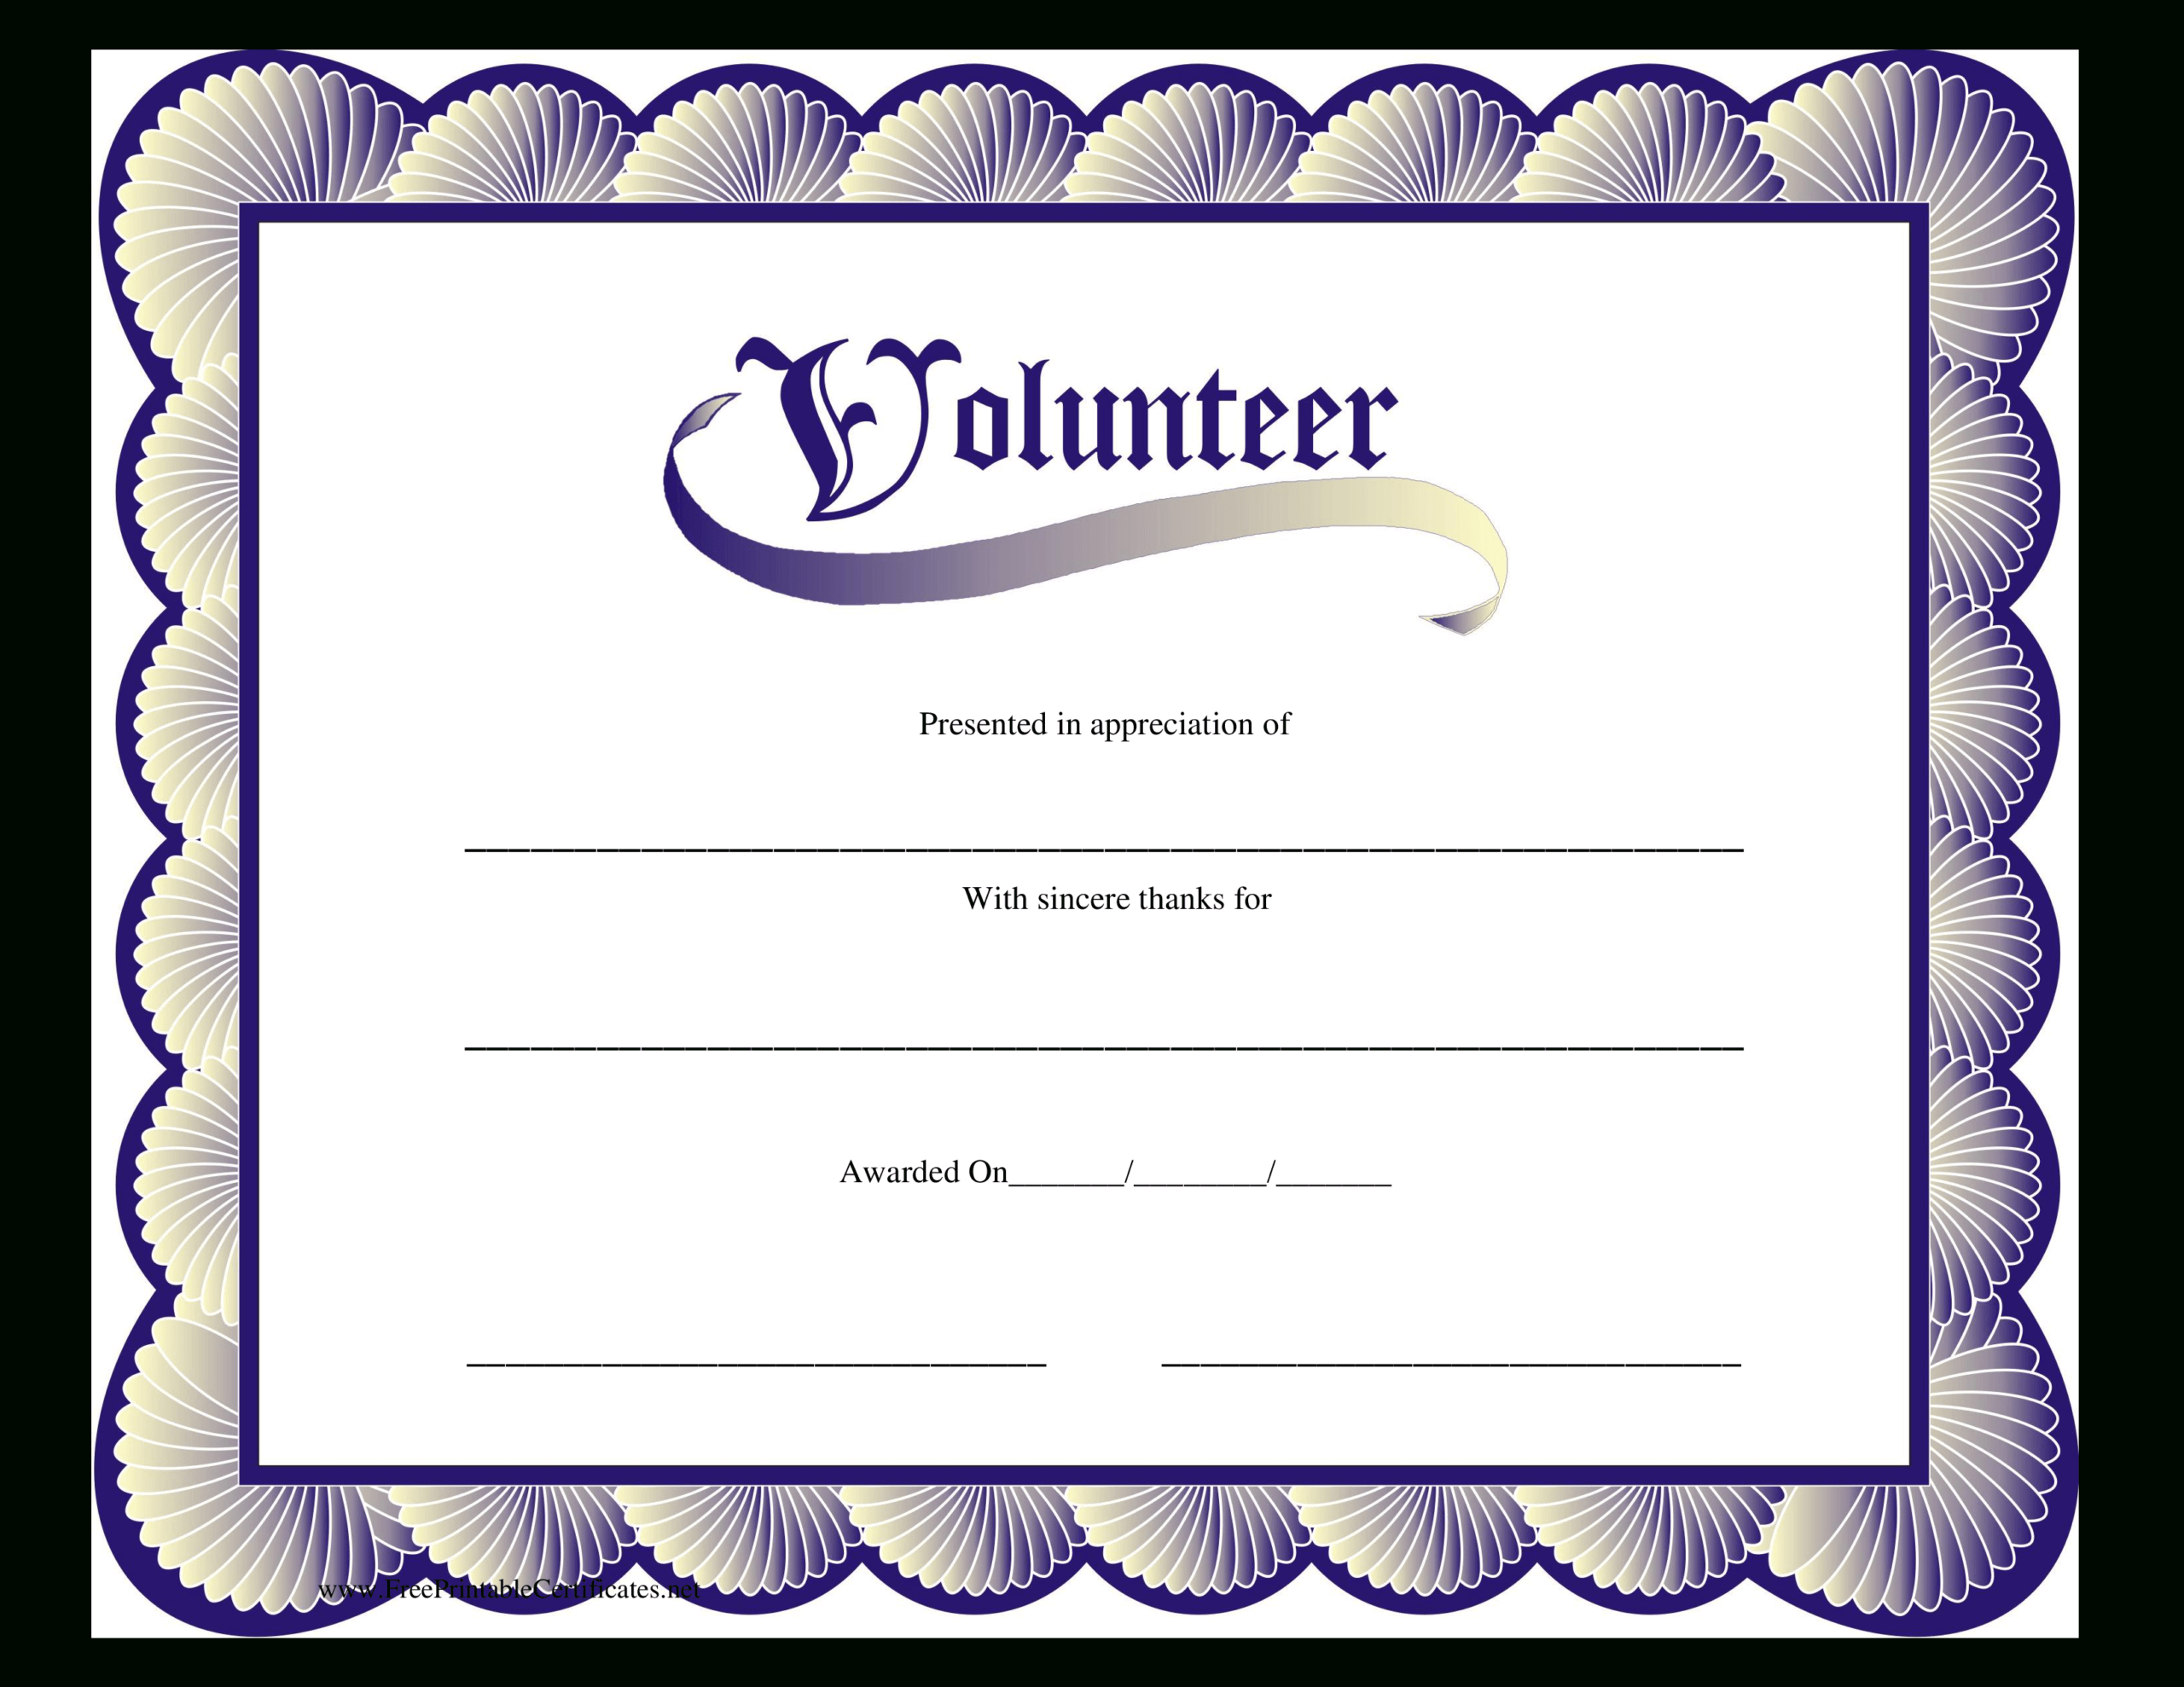 Volunteer Certificate | Templates At Allbusinesstemplates In Volunteer Award Certificate Template